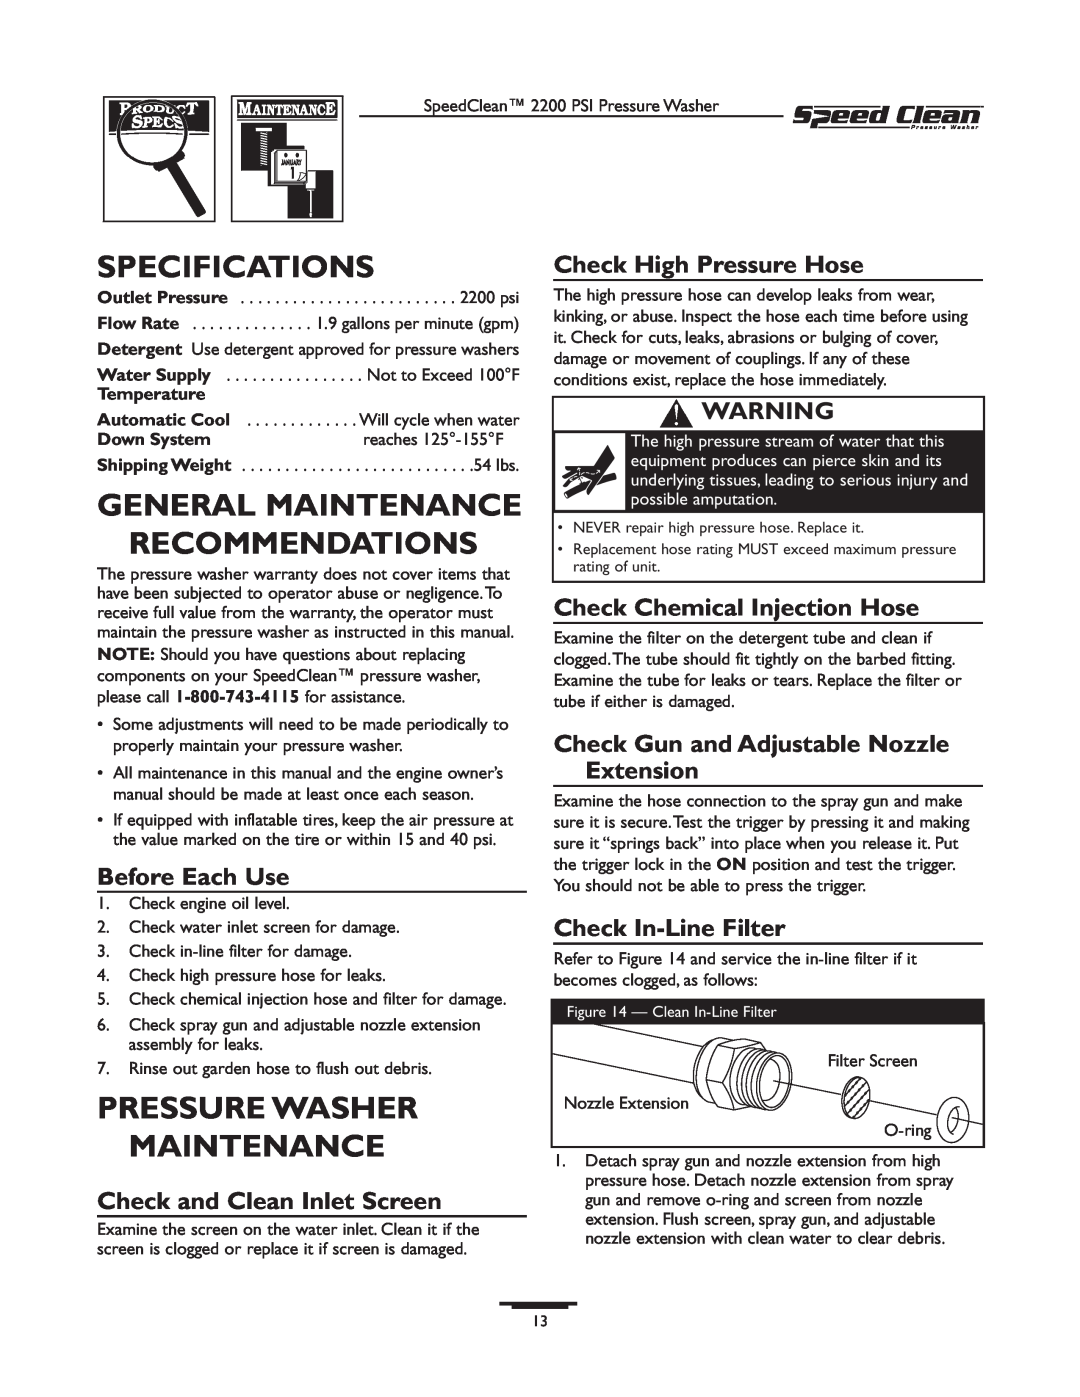 Briggs & Stratton 020239-1 Specifications, General Maintenance Recommendations, Pressure Washer Maintenance, Temperature 